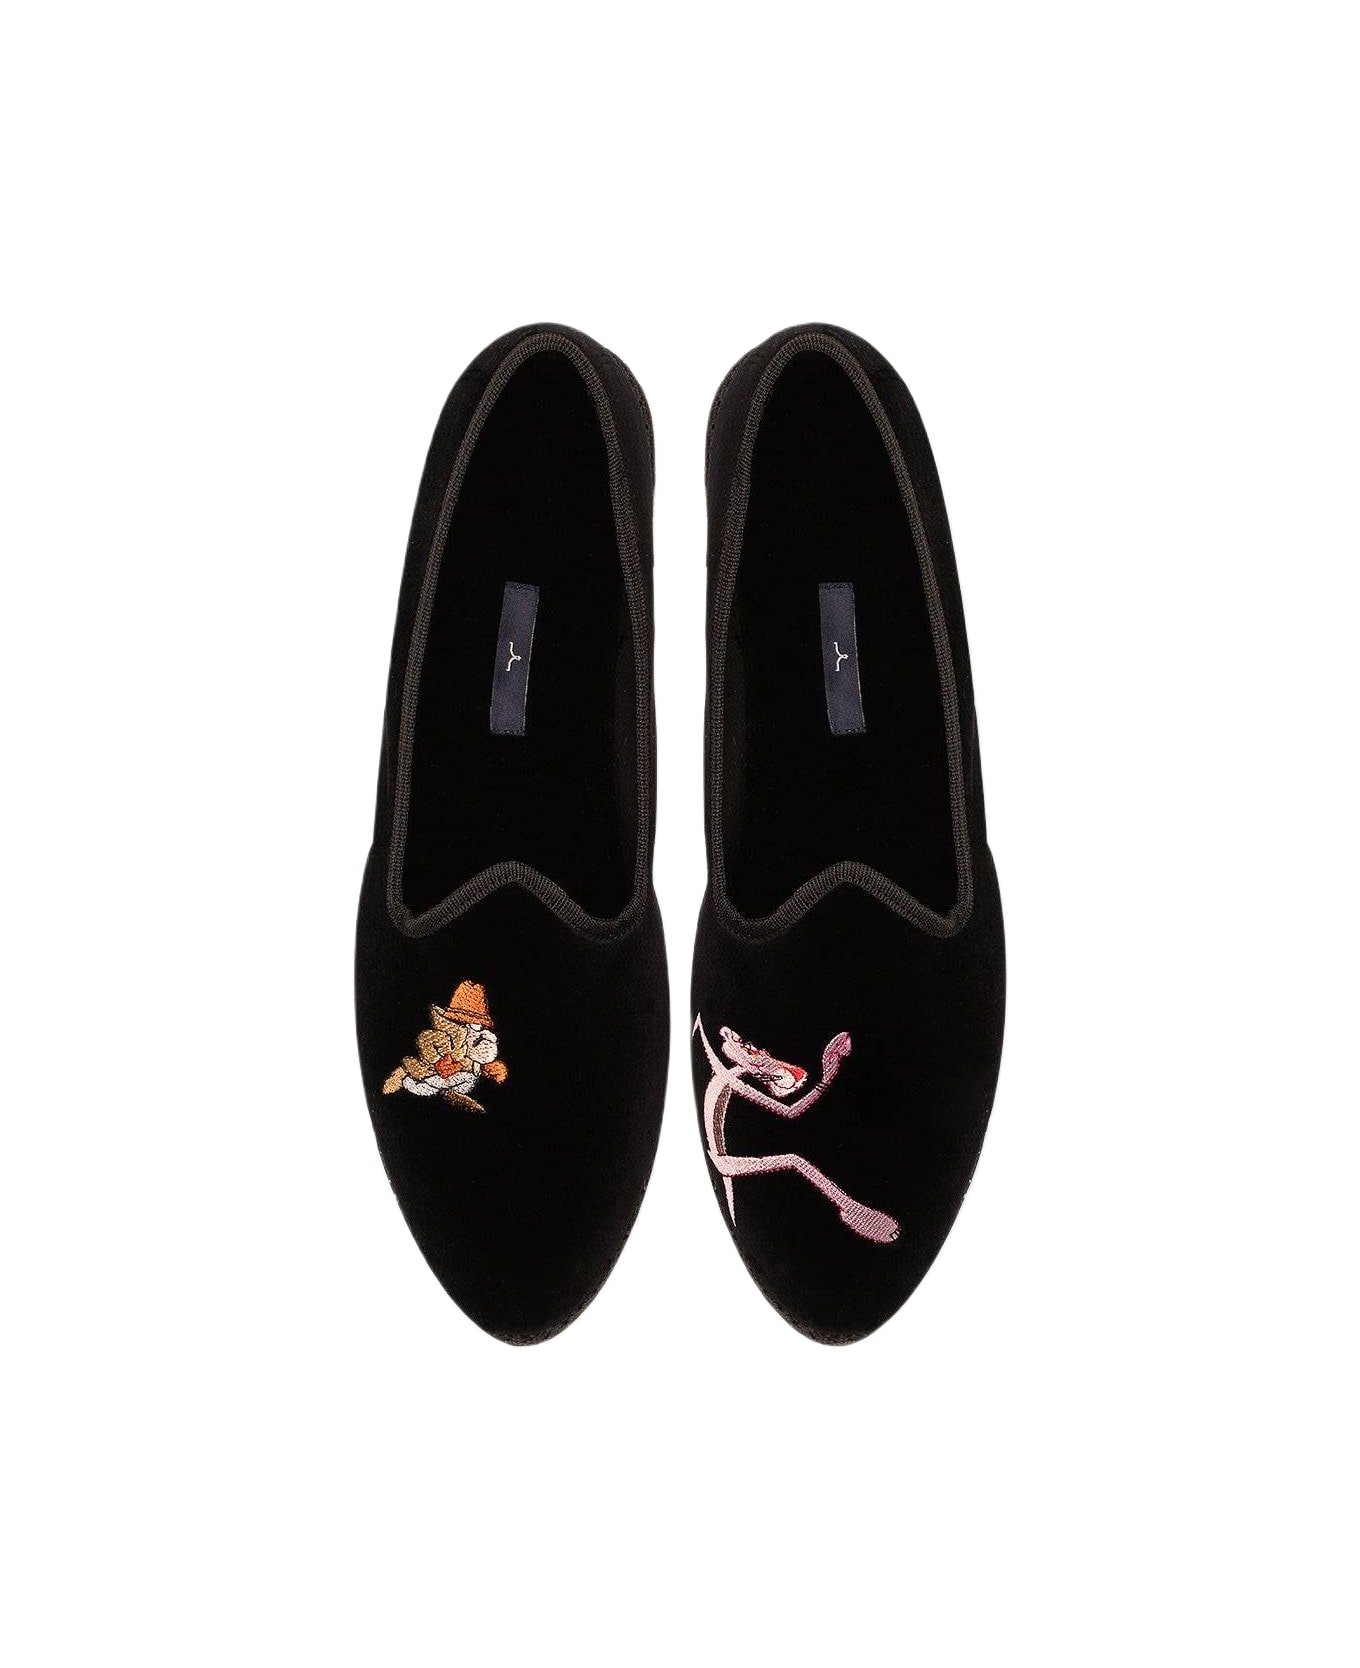 Larusmiani Friulana 'pink Panther' Shoes - Black